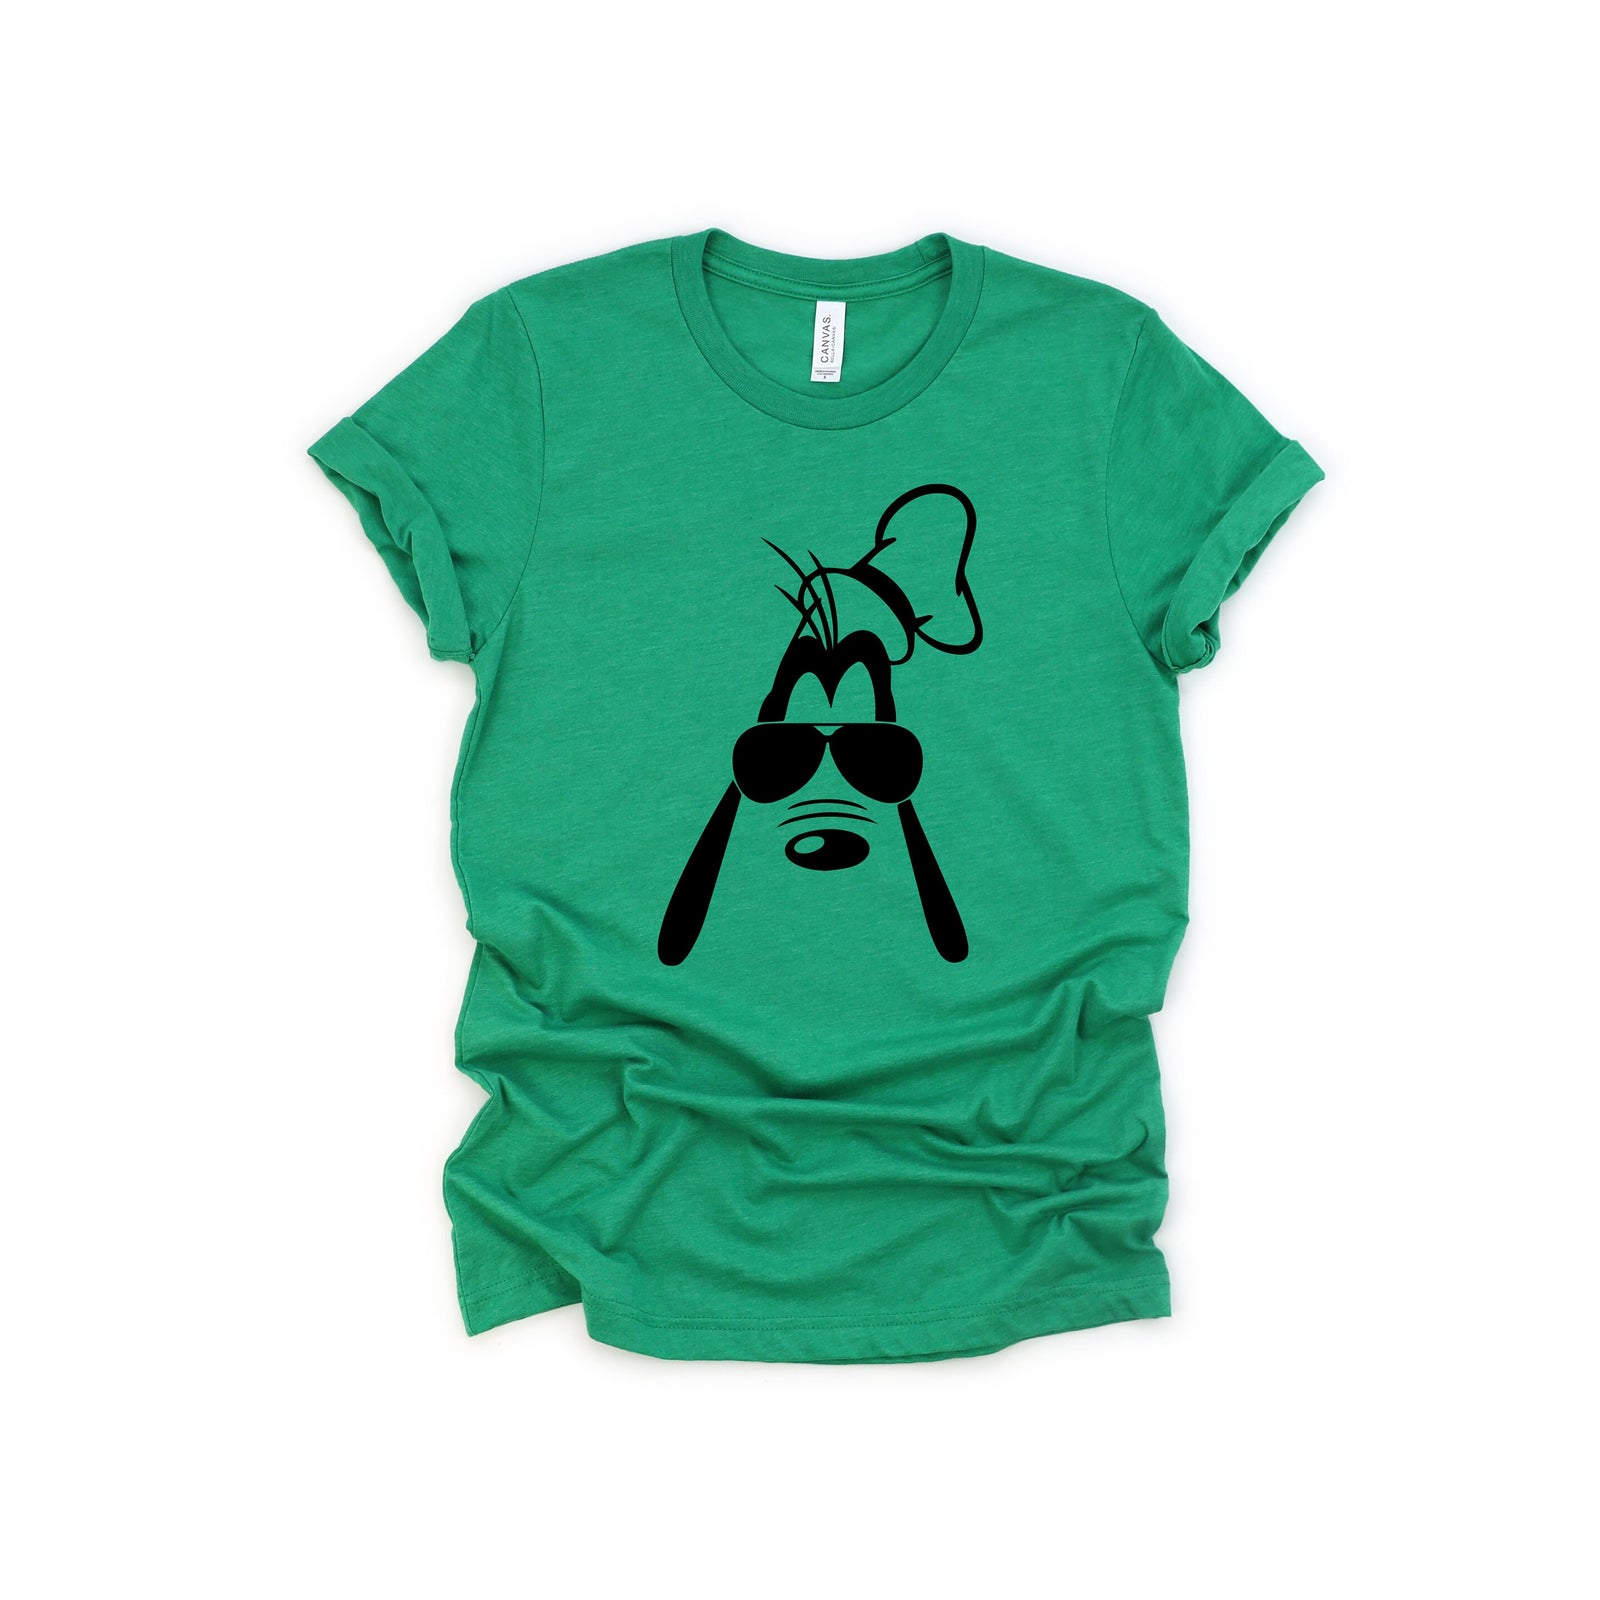 Goofy Adult Unisex T Shirt - Family Matching Shirts - Disney Characters - Sunglasses